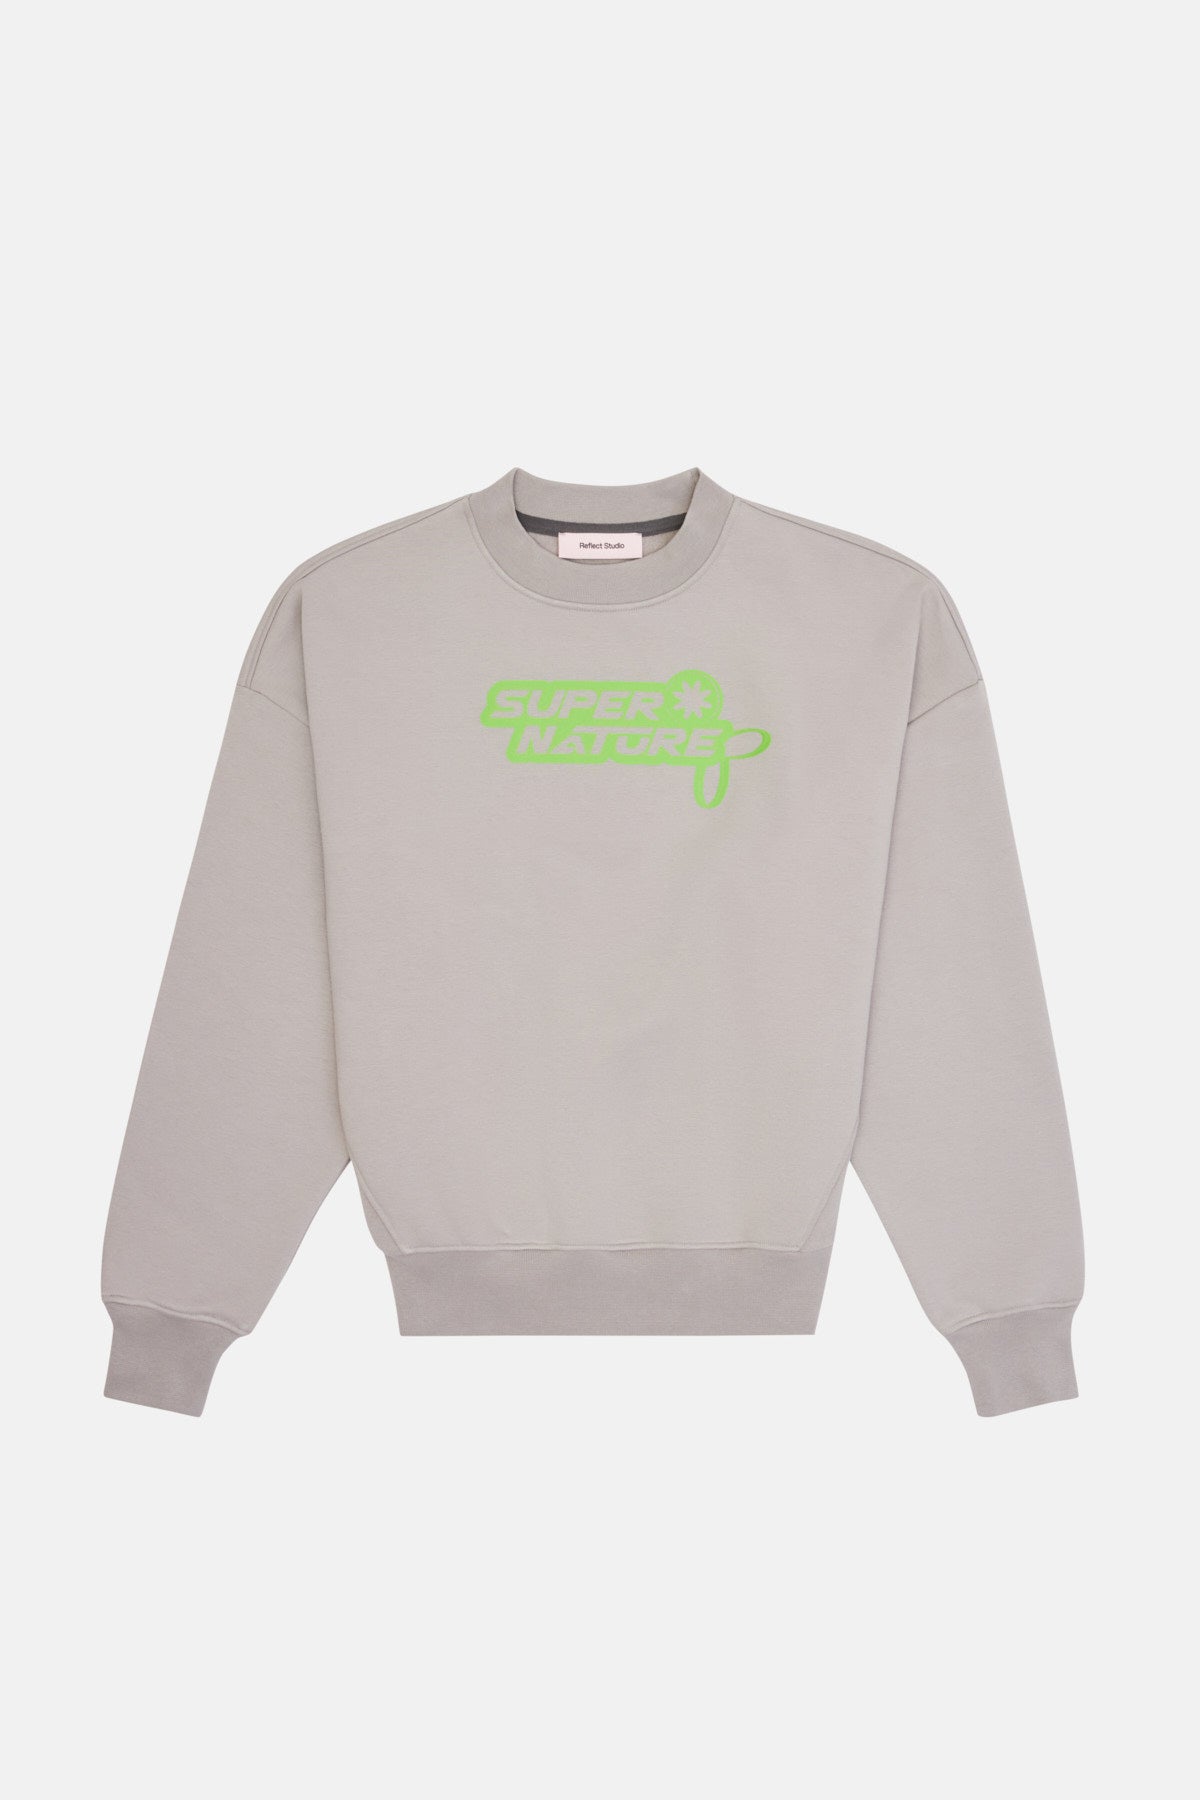 Super Nature Baggy Sweatshirt - Gray